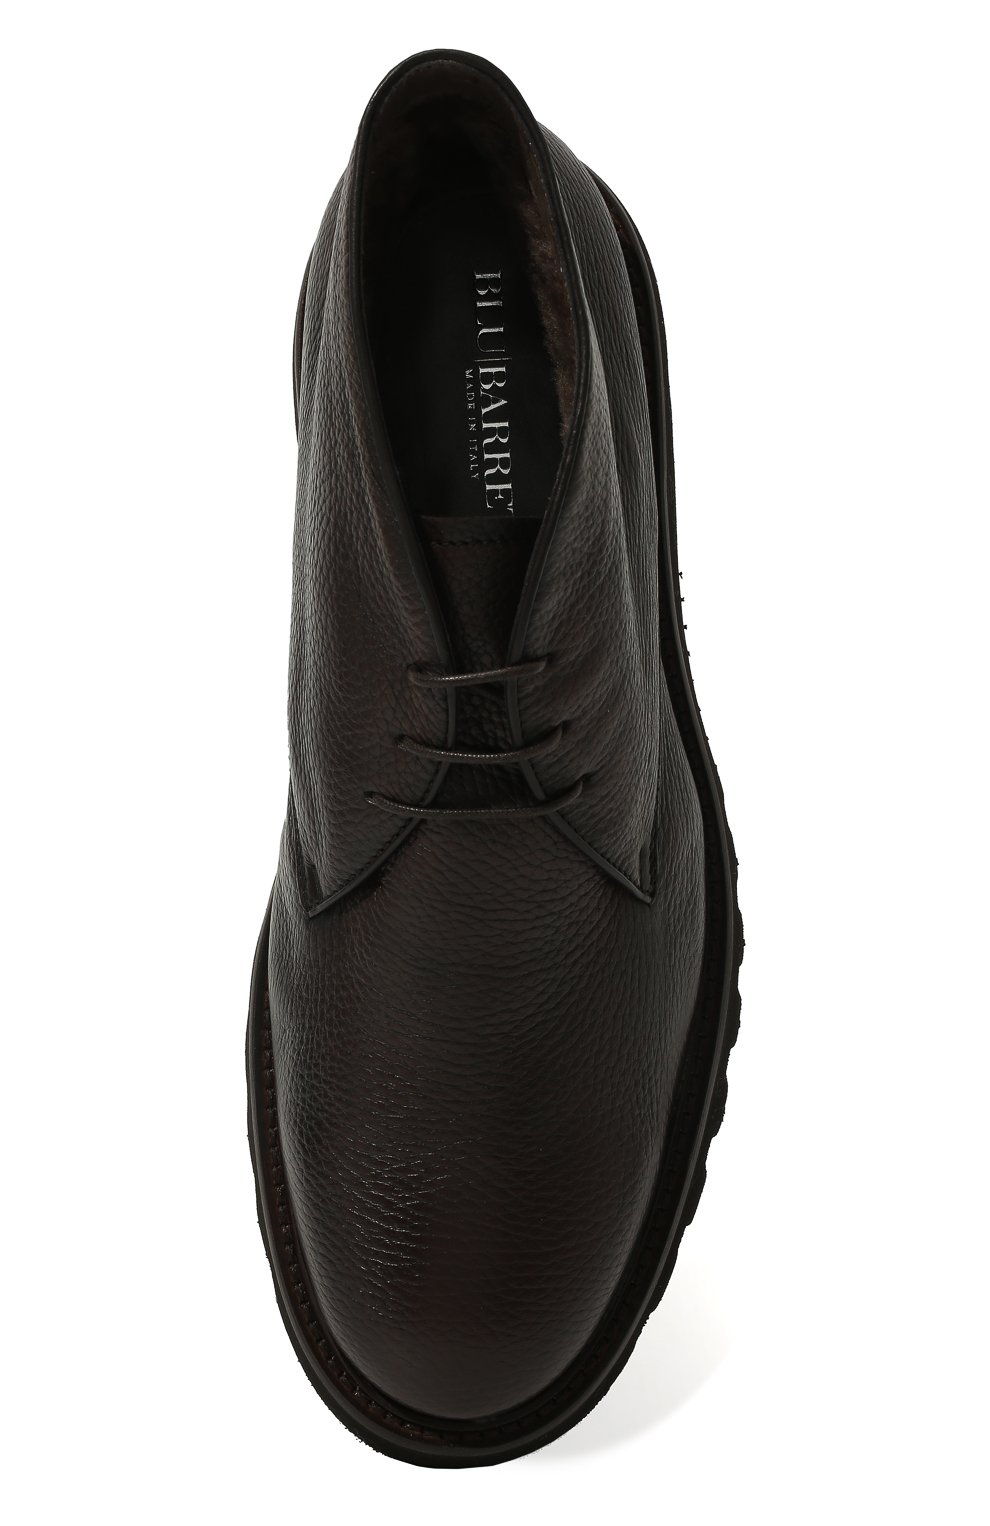 Мужские кожаные ботинки BARRETT темно-коричневого цвета, арт. BASTIA-024.6/CERV0 ASP0RTABILE | Фото 6 (Матер иал внешний: Кожа; Материал утеплителя: Натуральный мех; Мужское Кросс-КТ: Ботинки-обувь, Дезерты-обувь, зимние ботинки; Материал сплава: Проставлено; Нос: Не проставлено)